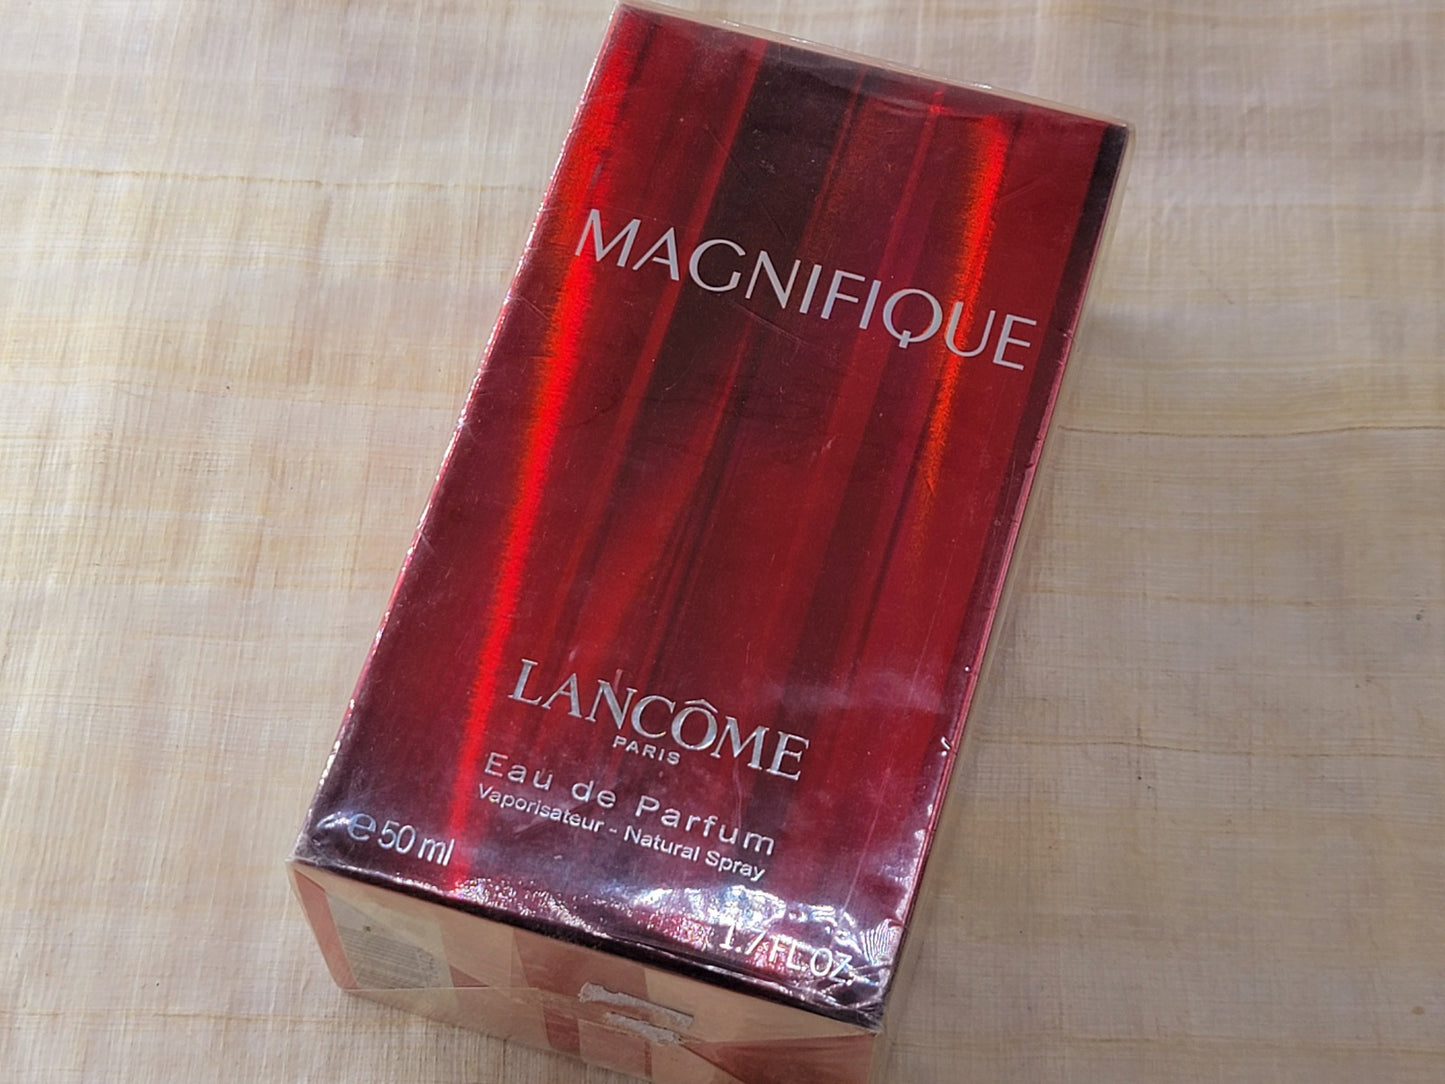 Magnifique Lancôme for women EDP Spray 50 ml 1.7 oz, Vintage, Rare, Sealed